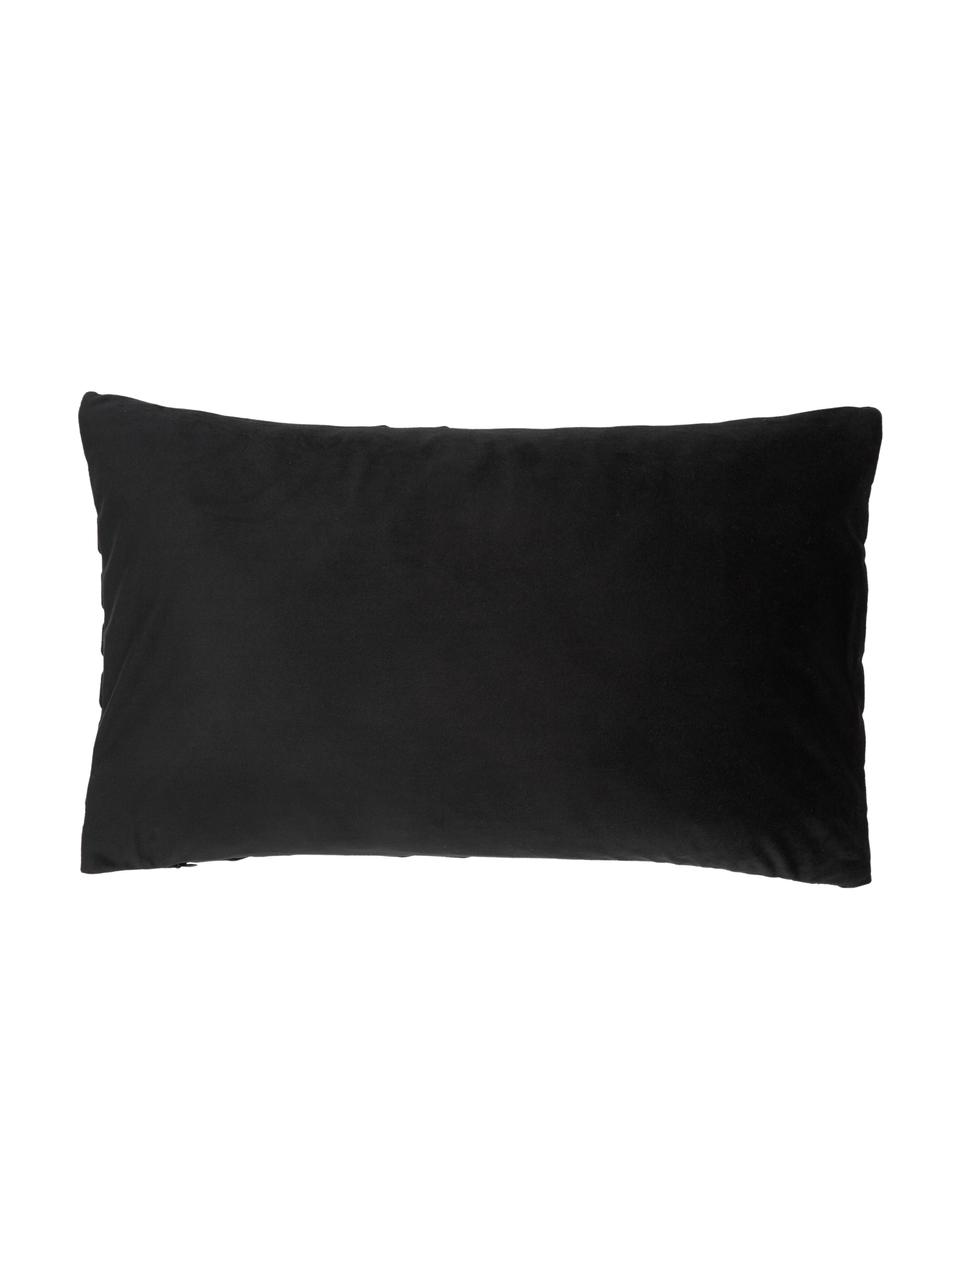 Fluwelen kussenhoes Lucie in zwart met structuur-oppervlak, 100% fluweel (polyester), Zwart, B 30 x L 50 cm